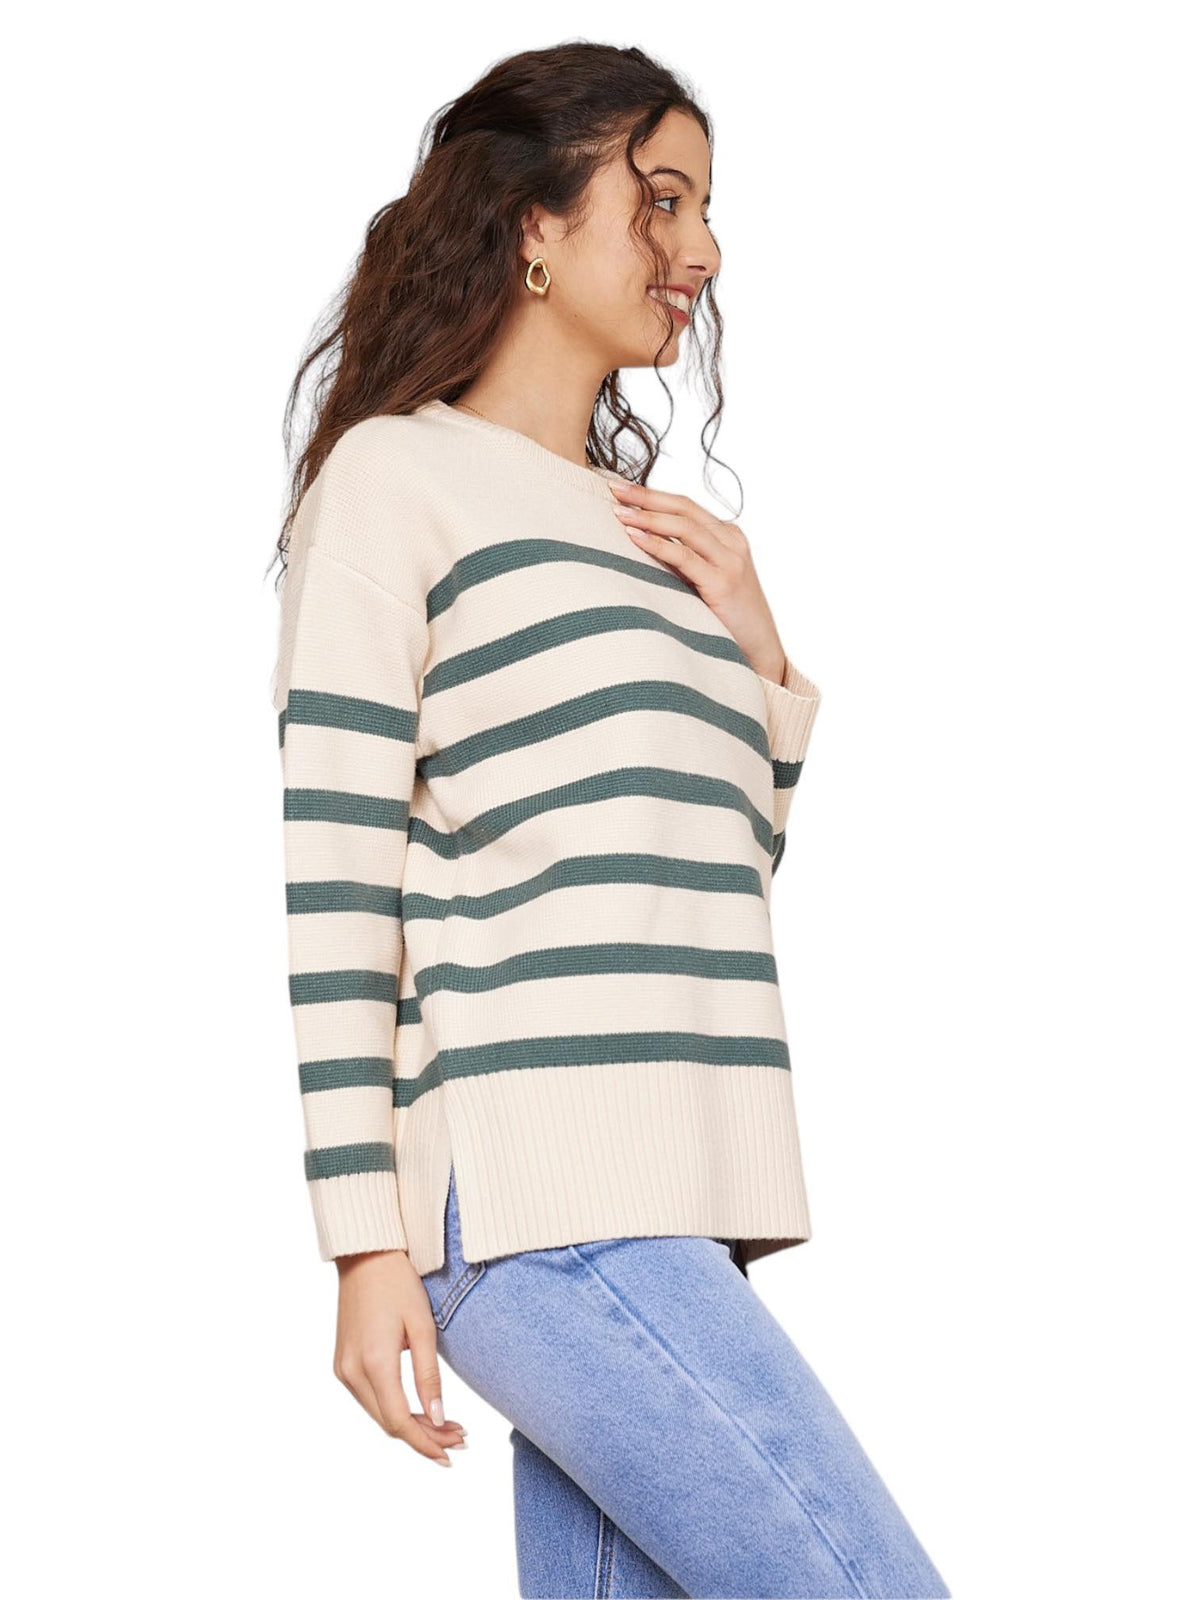 ‘Zara' Stripe Knit - Emerald